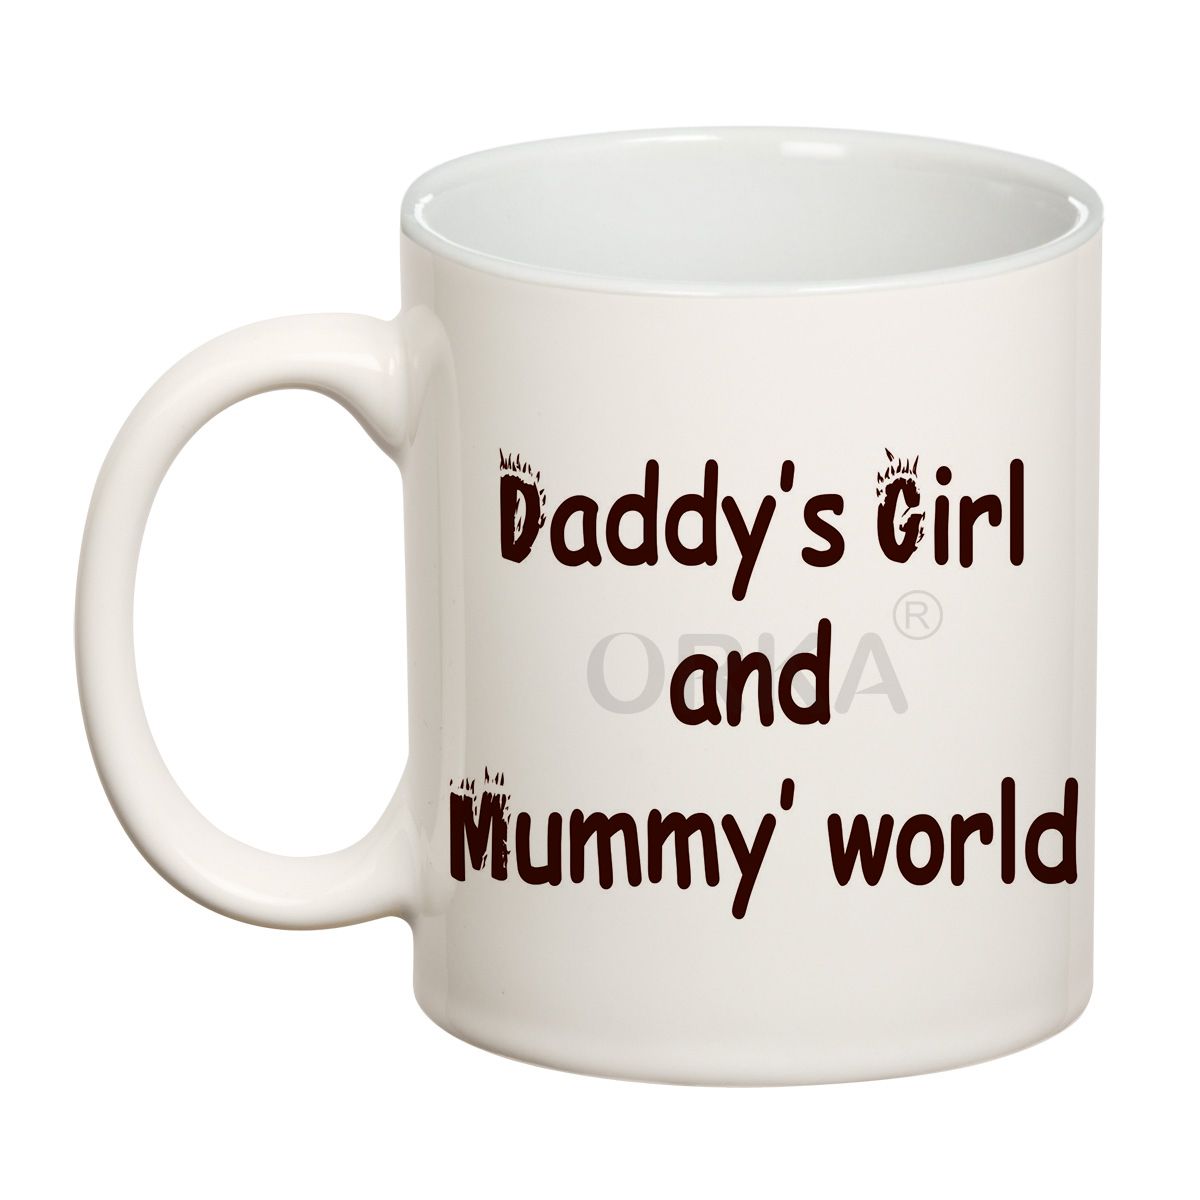 ORKA Coffee Mug Quotes Printed(Daddy